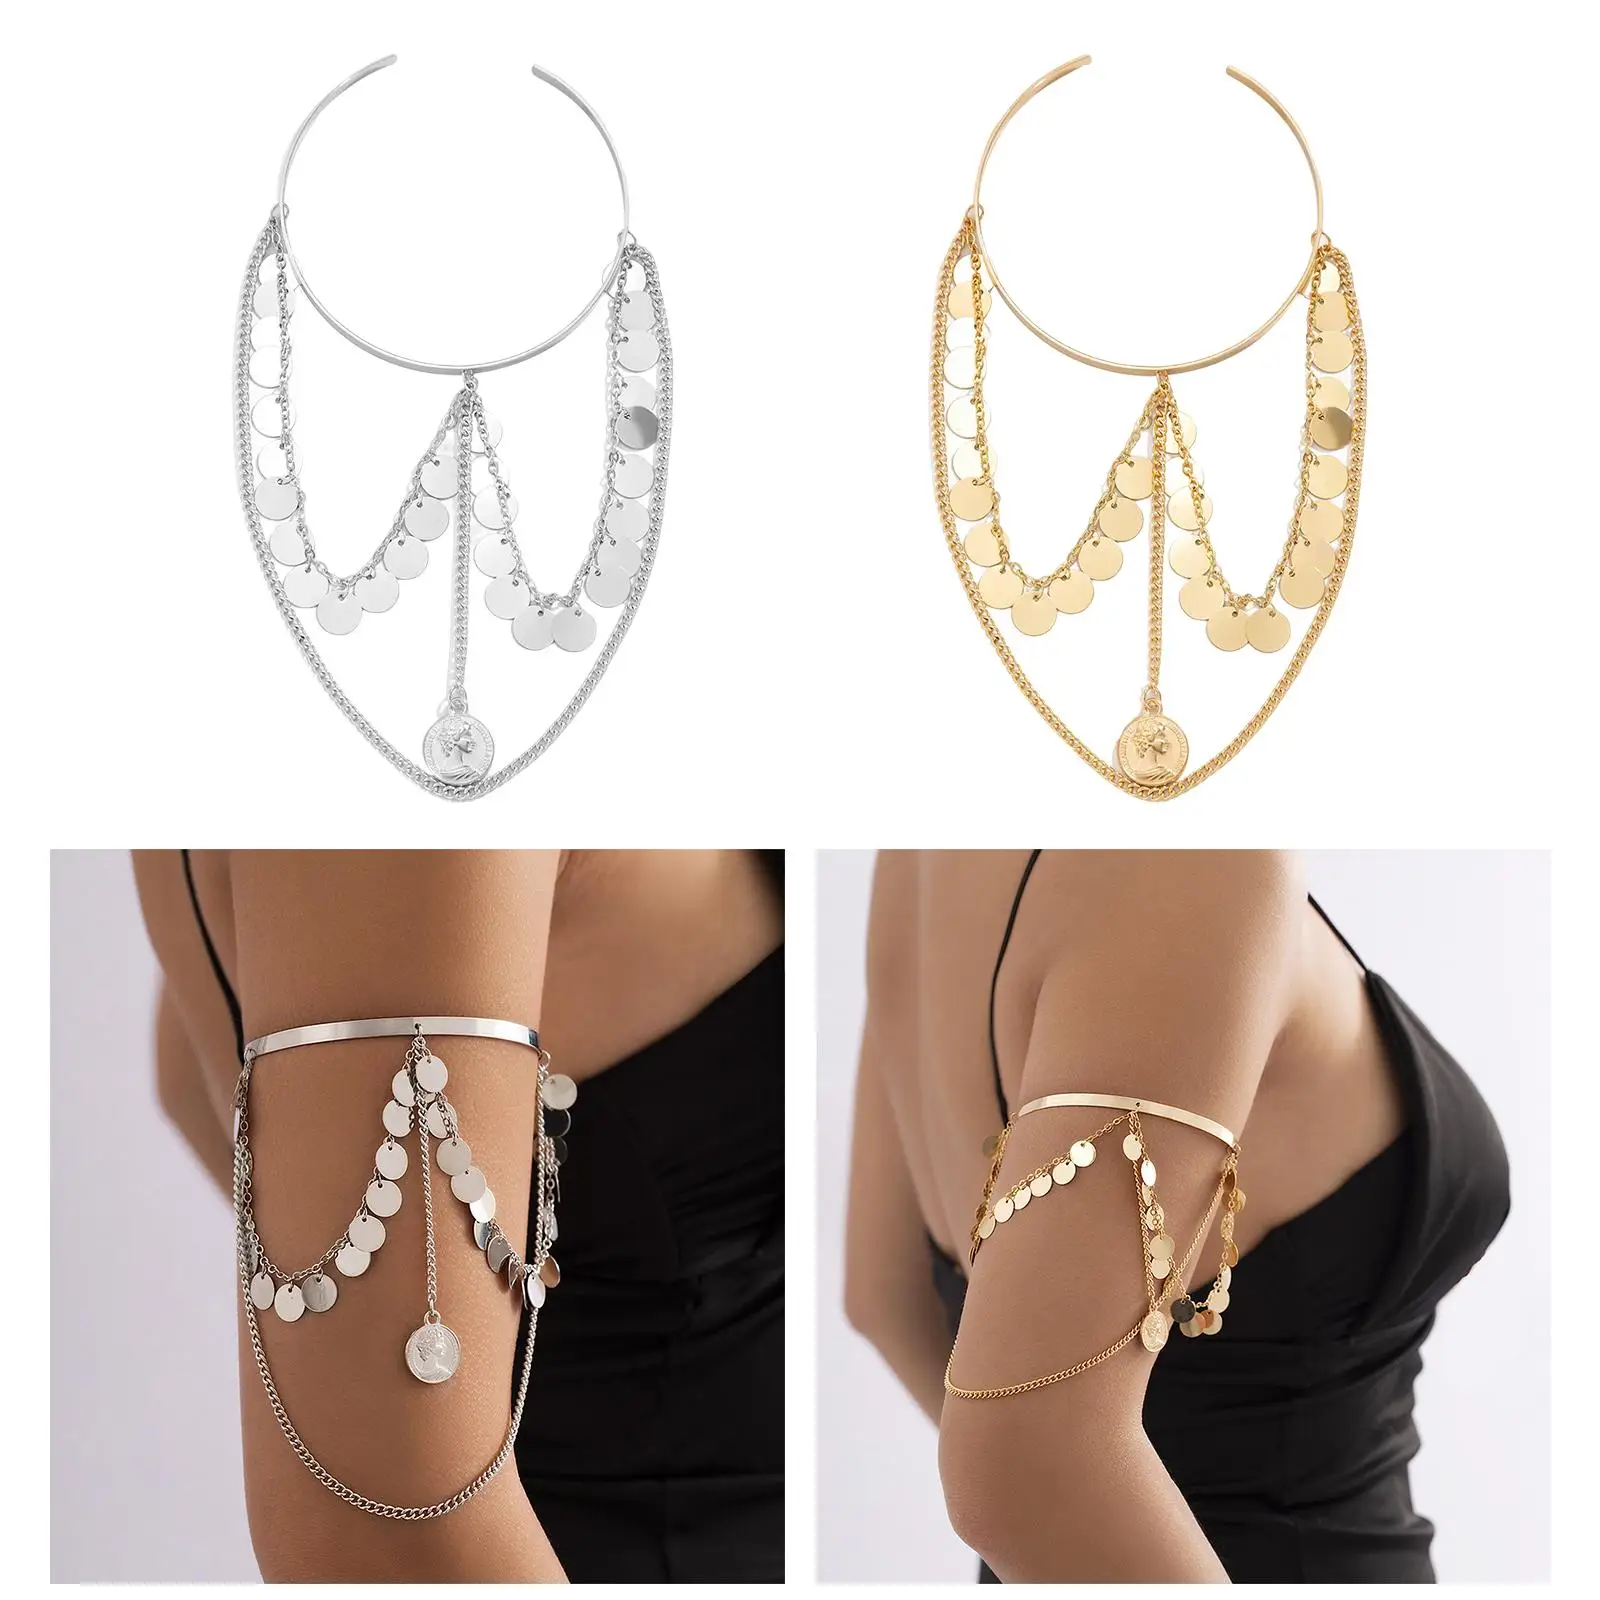 Boho Chain Tassels Arm Bracelet Upper Arm Cuff Adjustable Armband Open Arm Bracelet Women Jewelry Smooth Surface Accessories